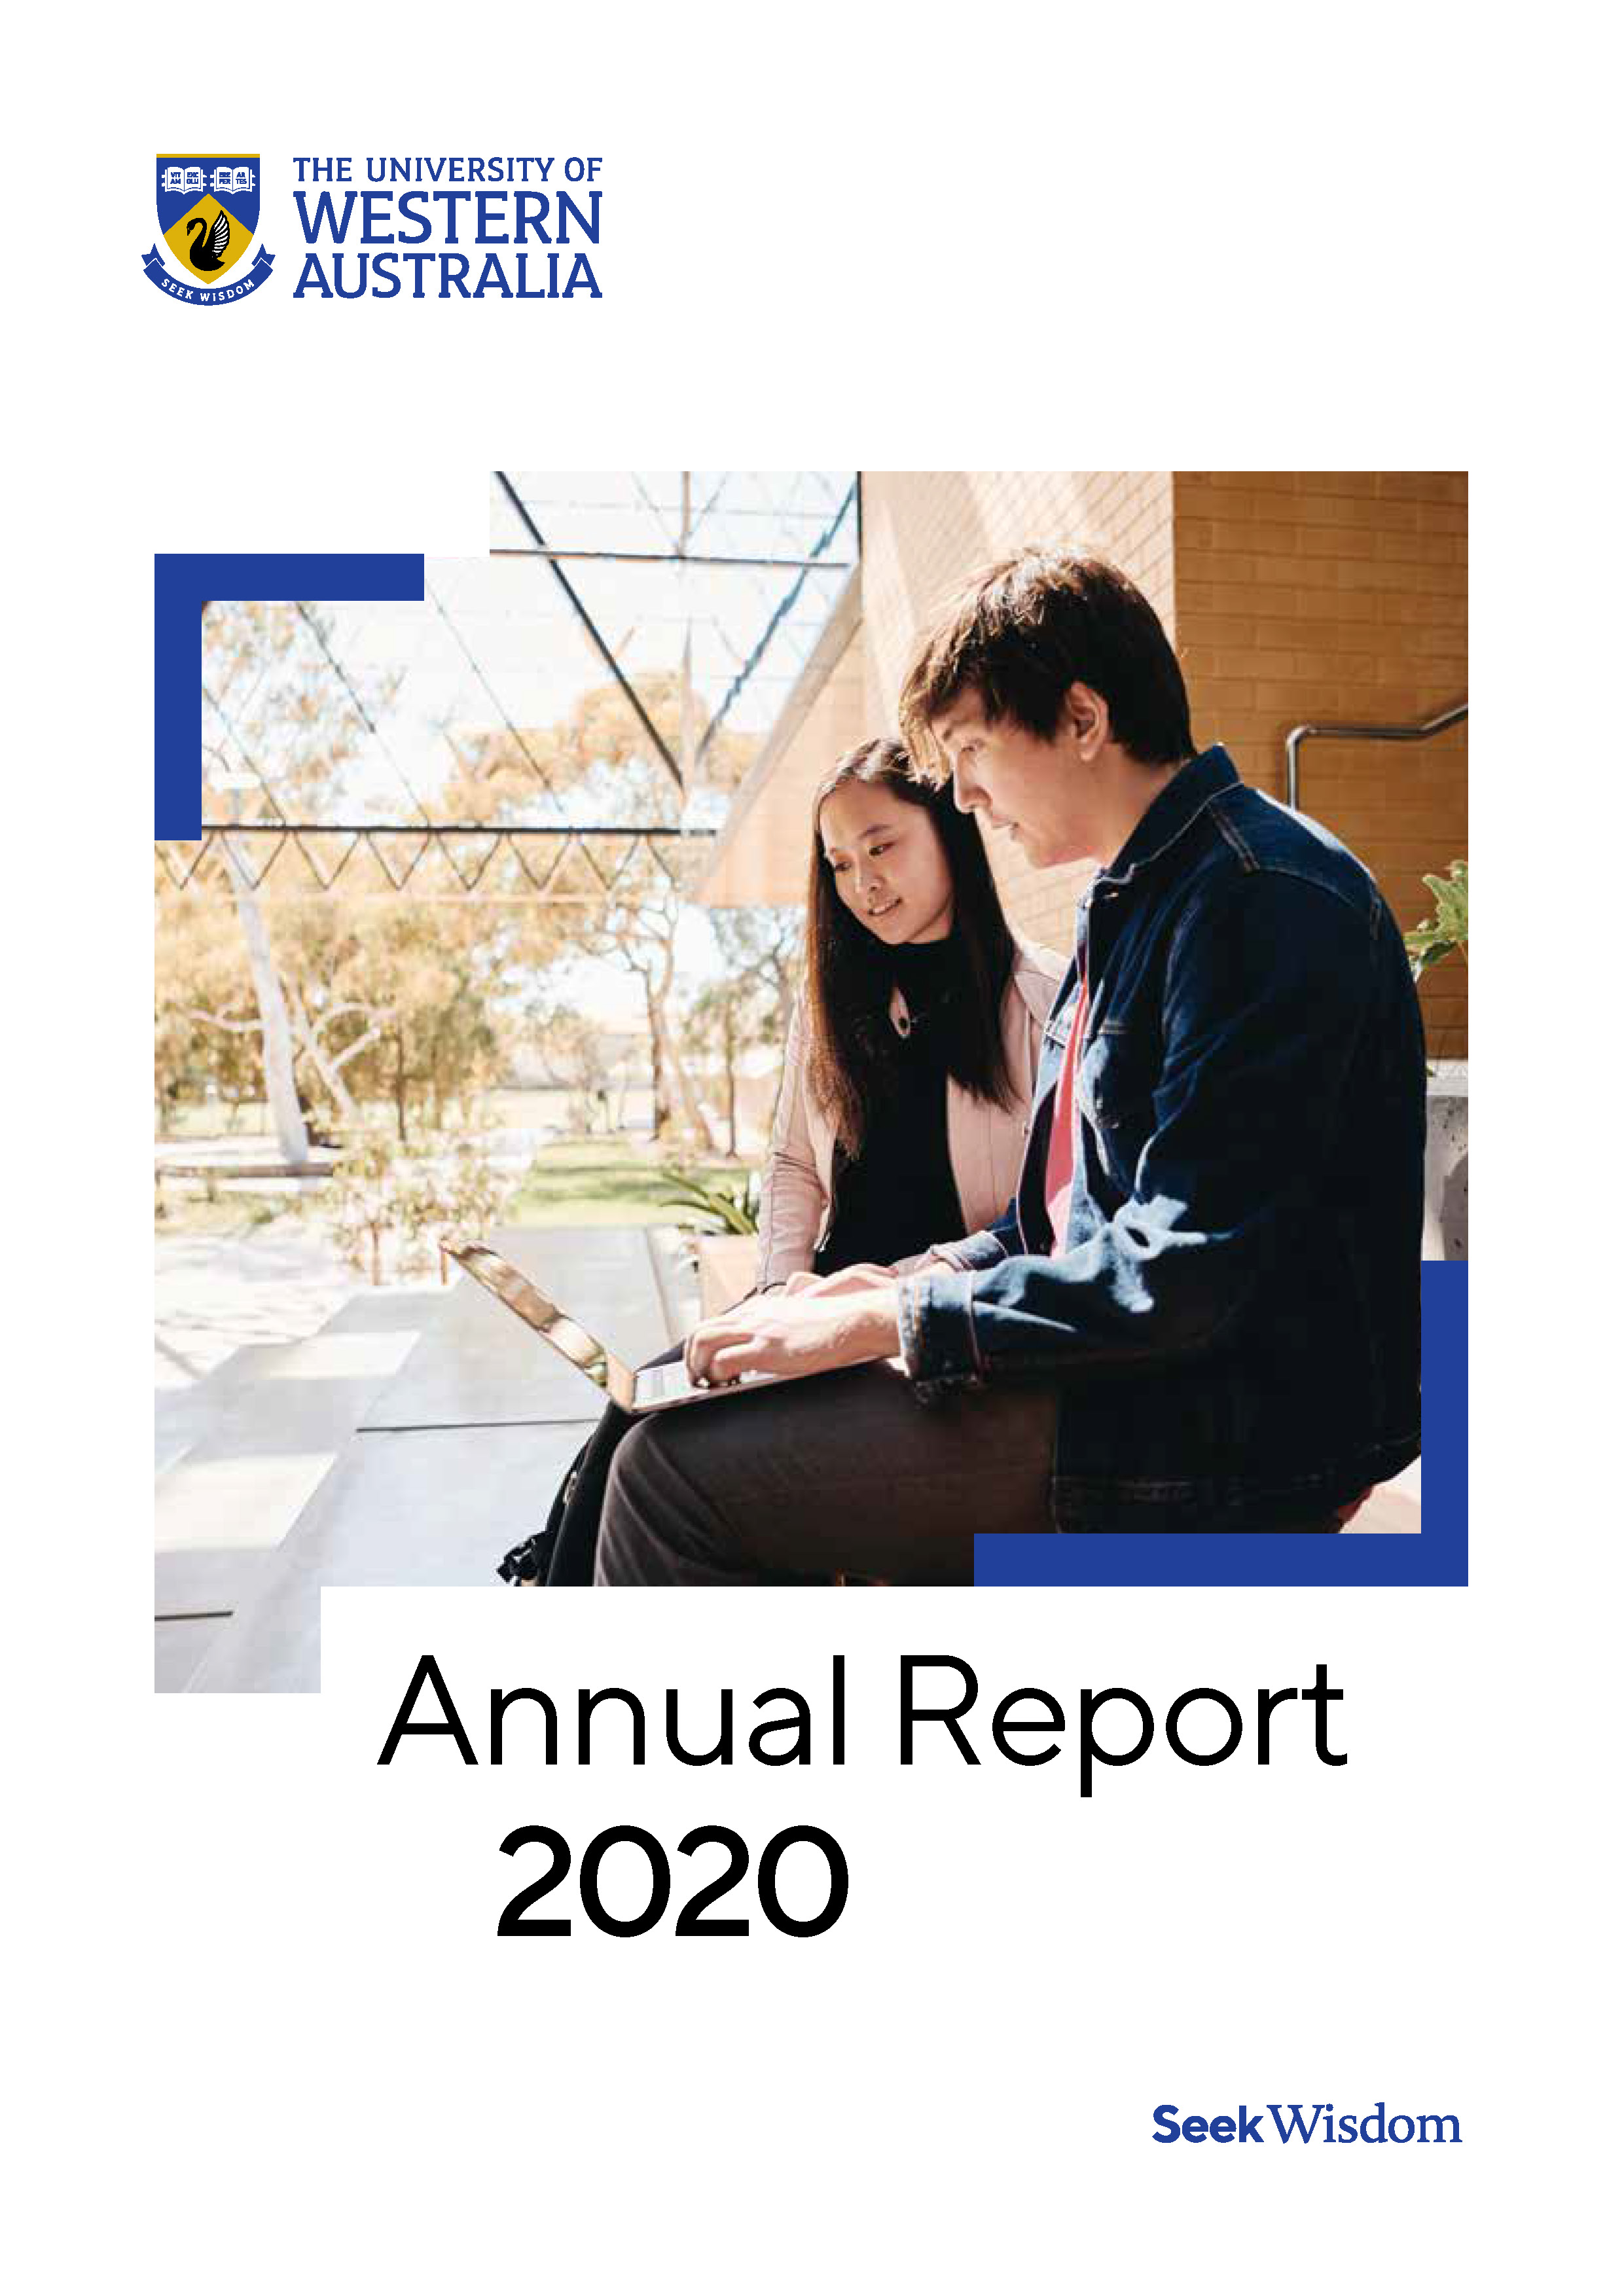 2020 Annual Report cover